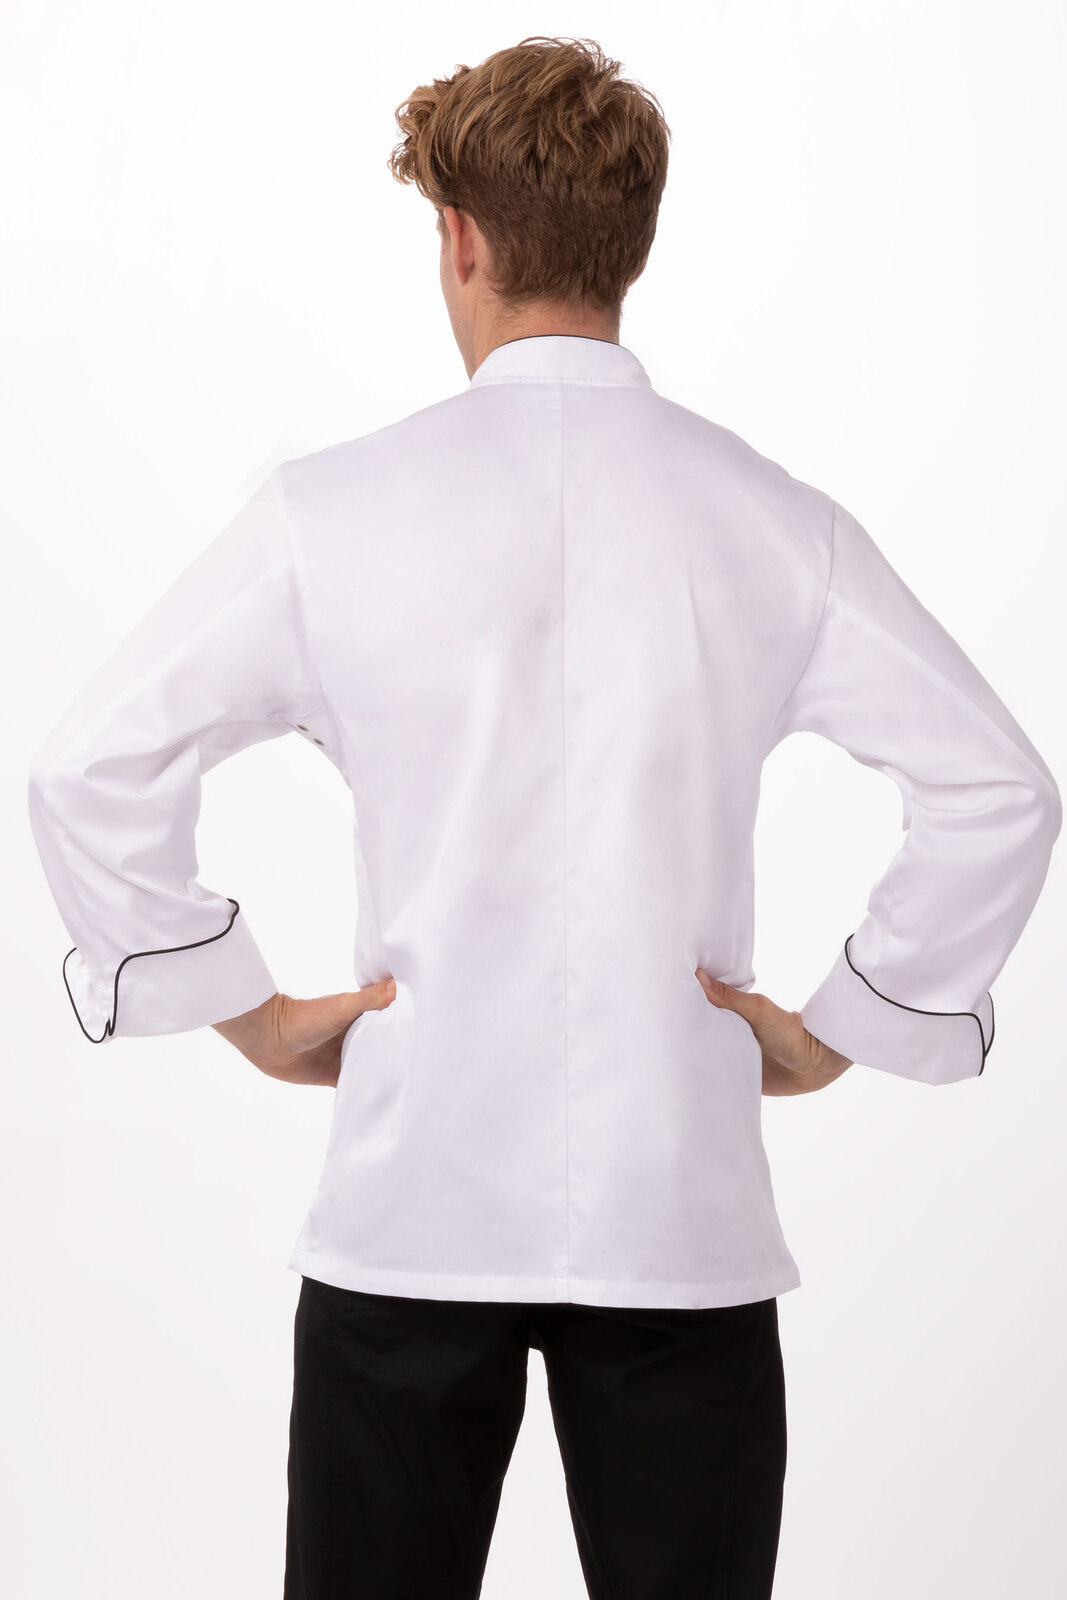 Garment Pattern 9500, Men's Chicago chef jacket pattern. Sizes  42,44,46,48,50,52,54,56,58 | Cad Patterns - Fashion Design Solution